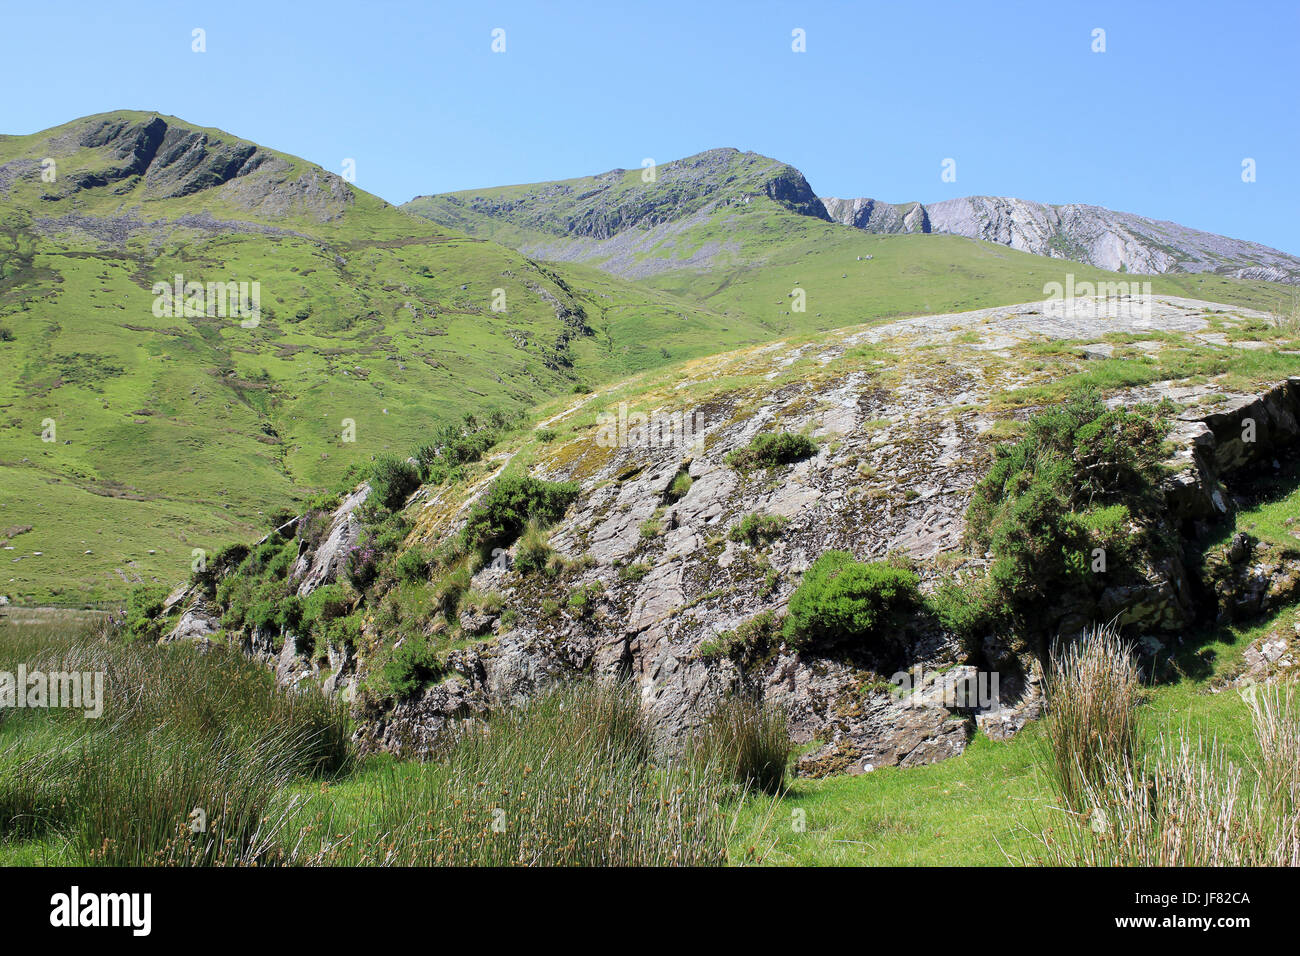 Roche Mountonee in the Nant Ffrancon Valley, Snowdonia, Wales Stock Photo